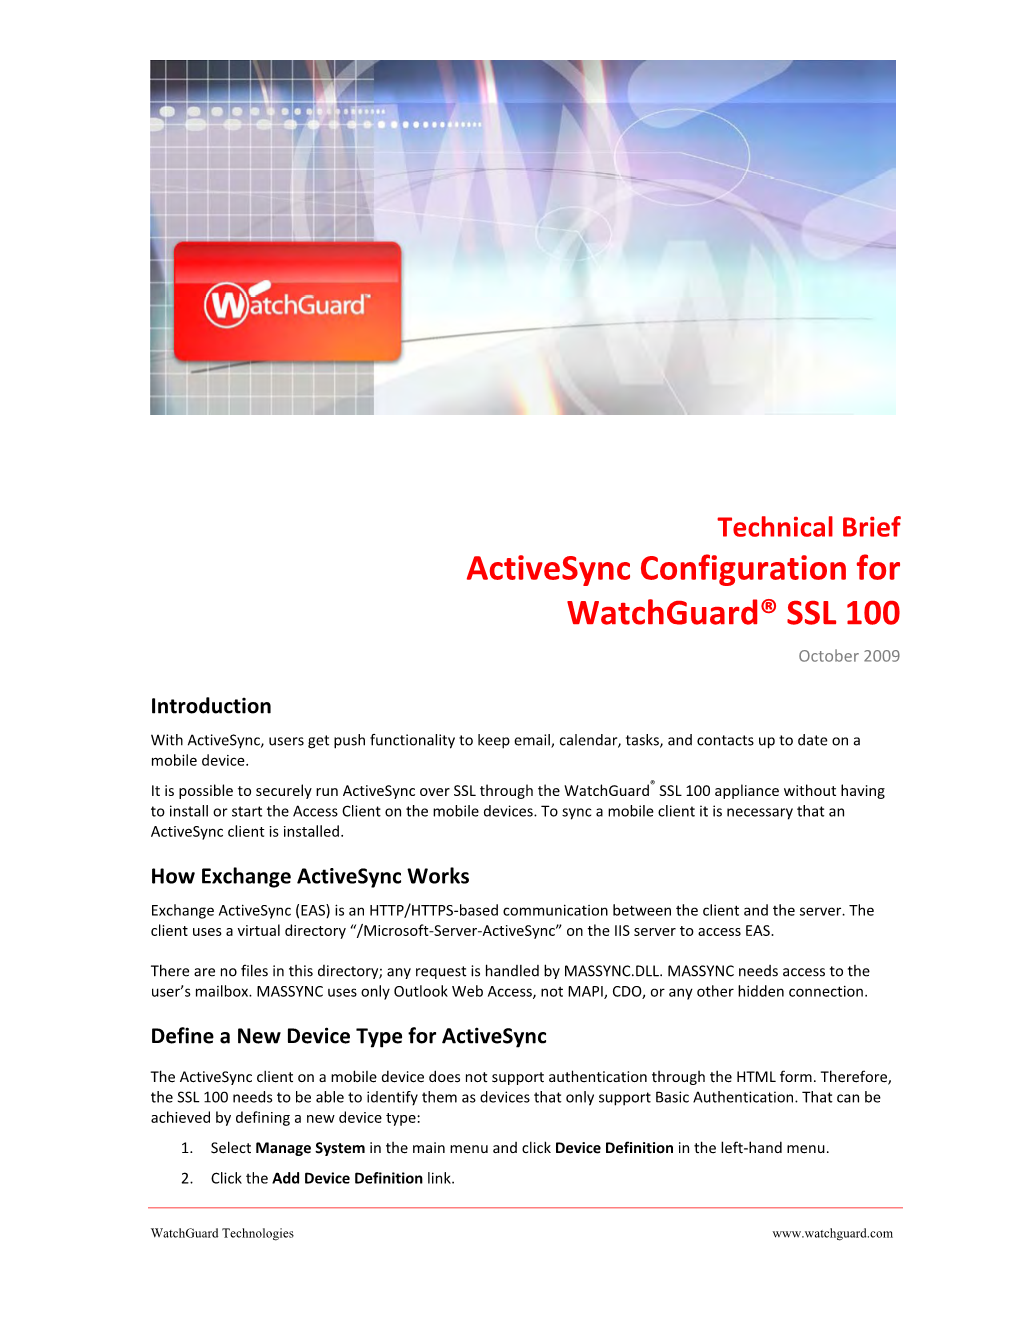 Activesync Configuration for Watchguard® SSL 100 Read